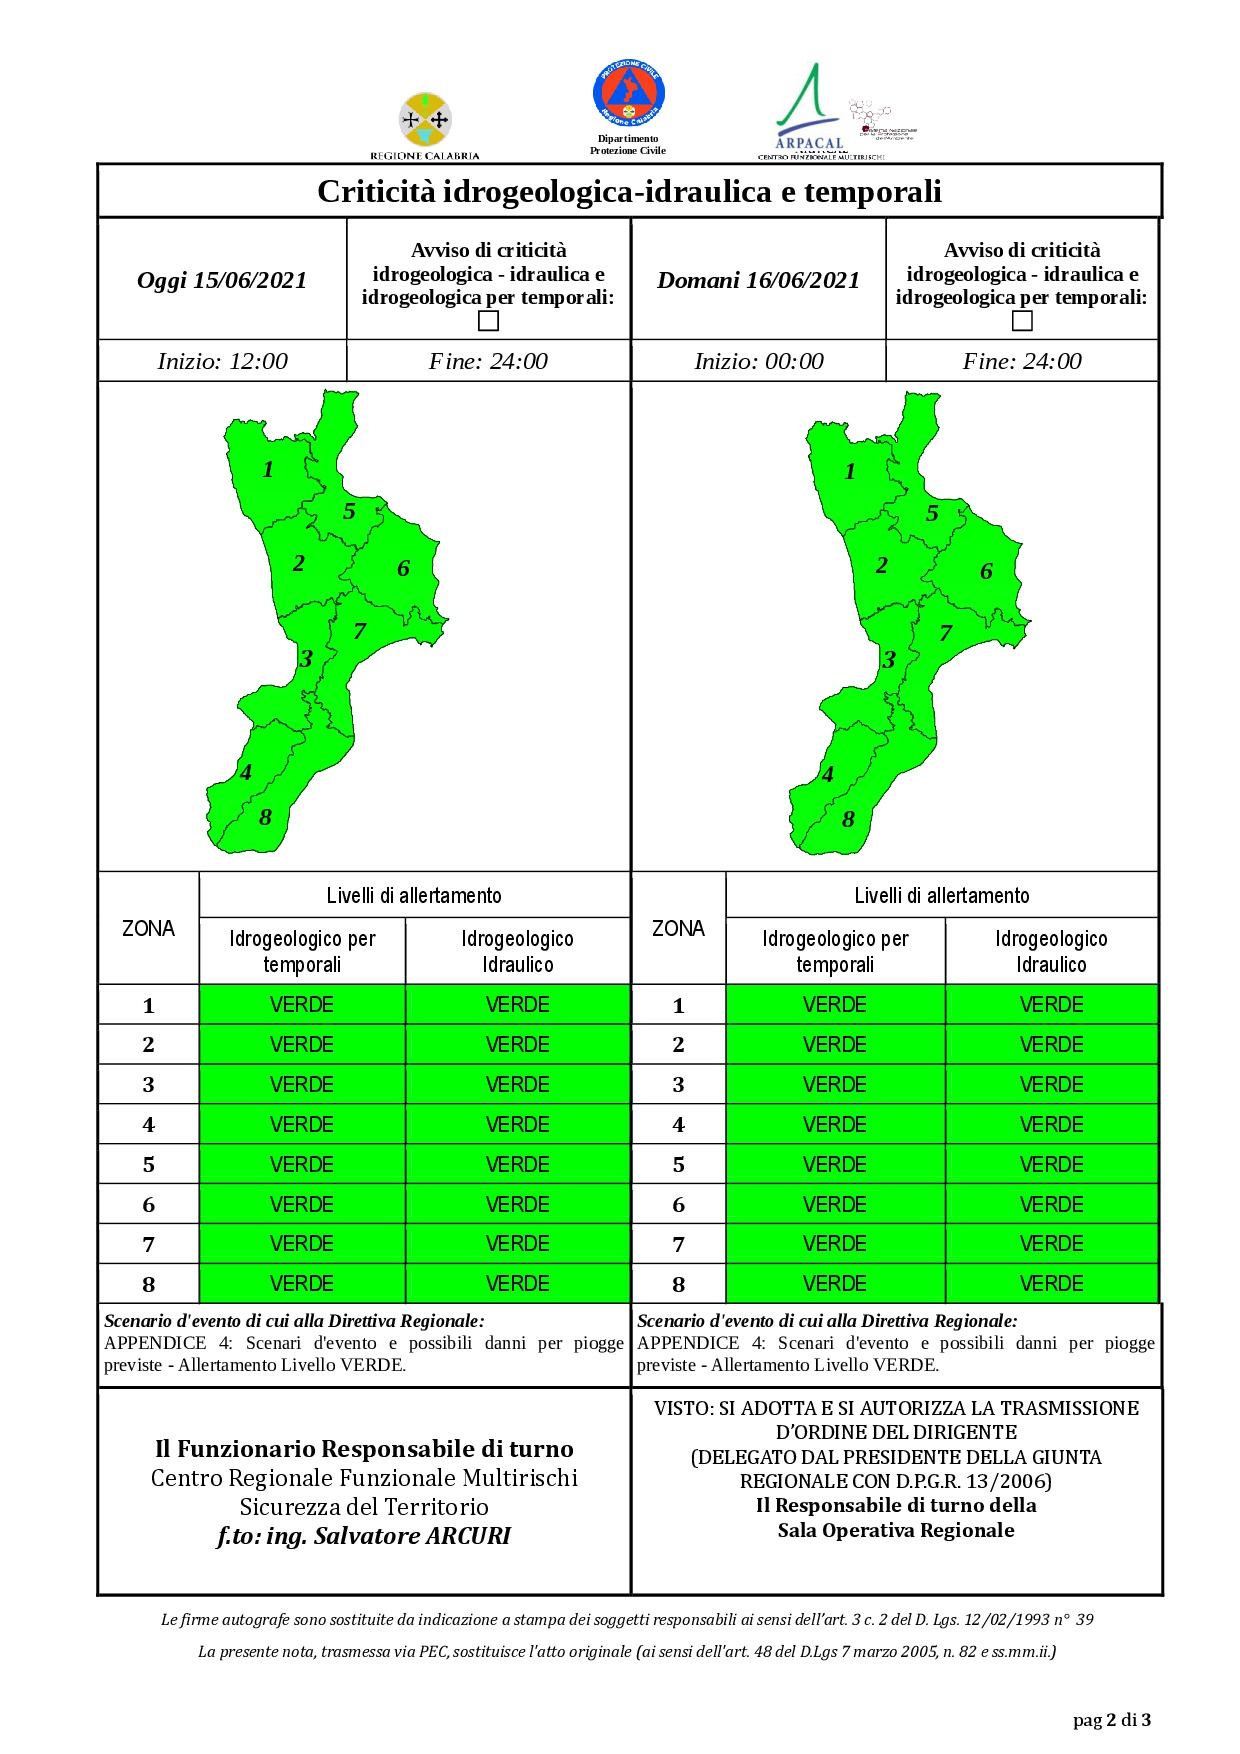 Criticità idrogeologica-idraulica e temporali in Calabria 15-06-2021